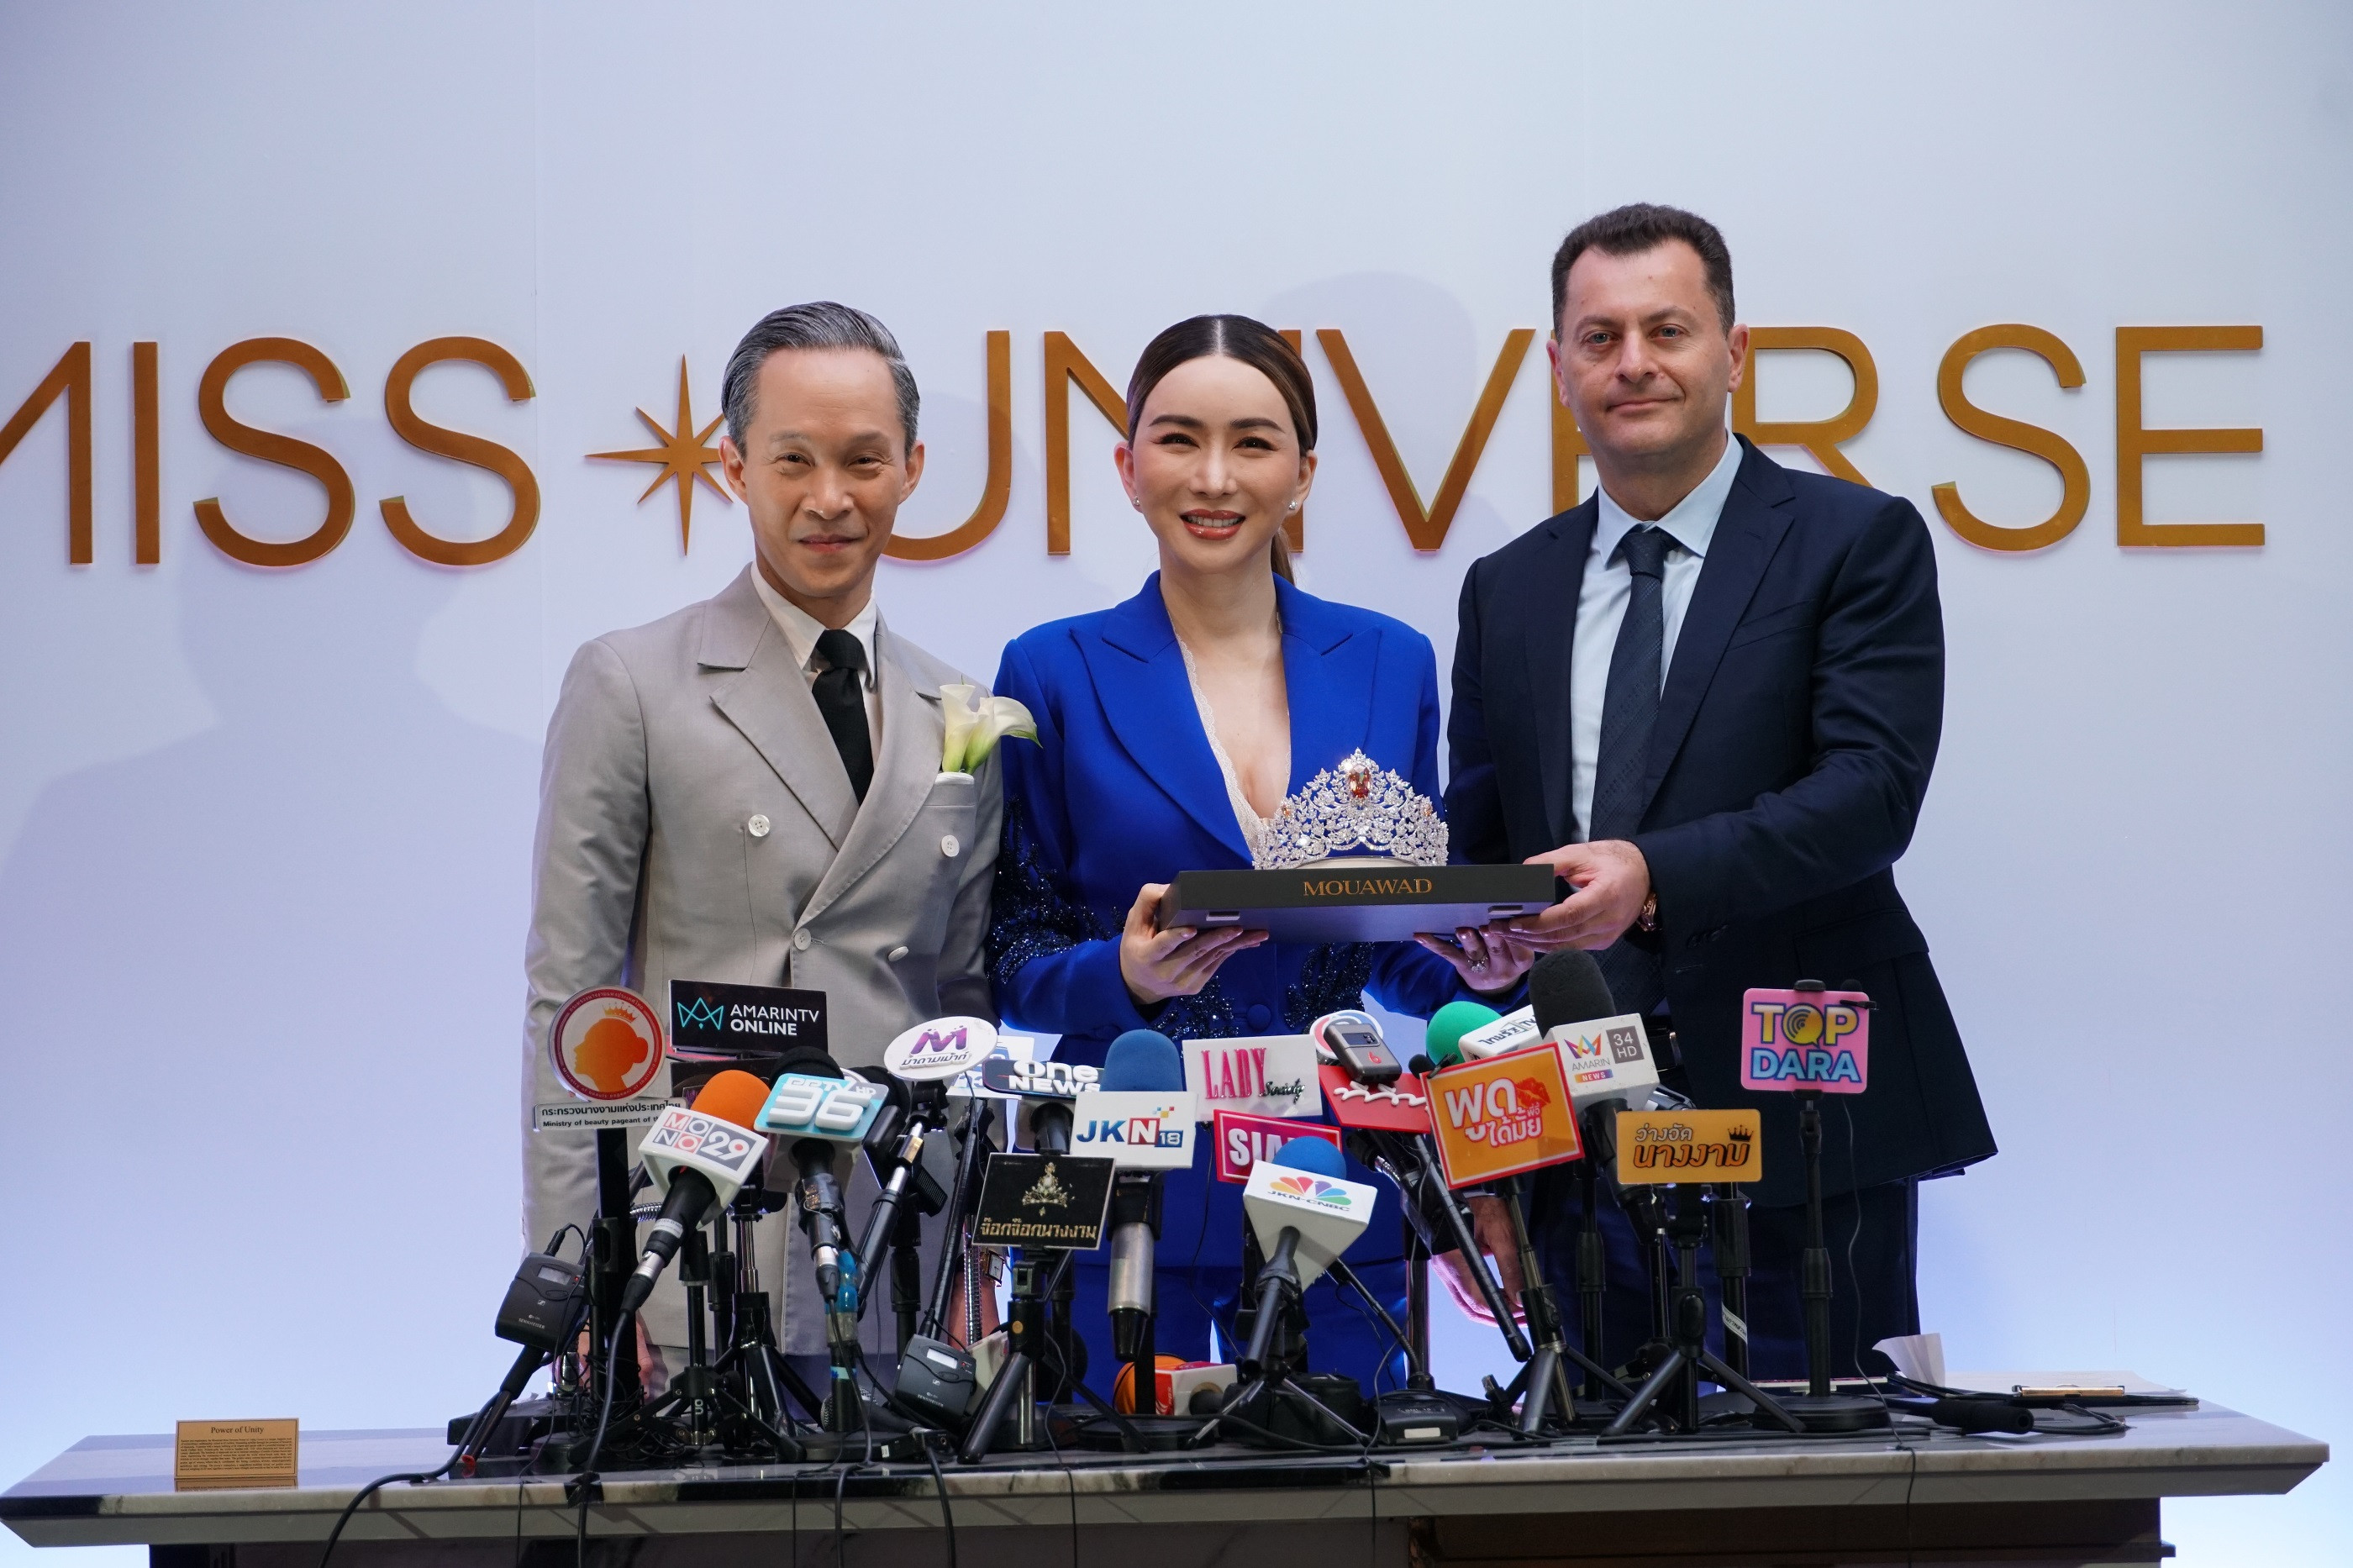 "The Miss Universe Organization" Milik Img Berhasil Diakuisisi Jkn Global Group